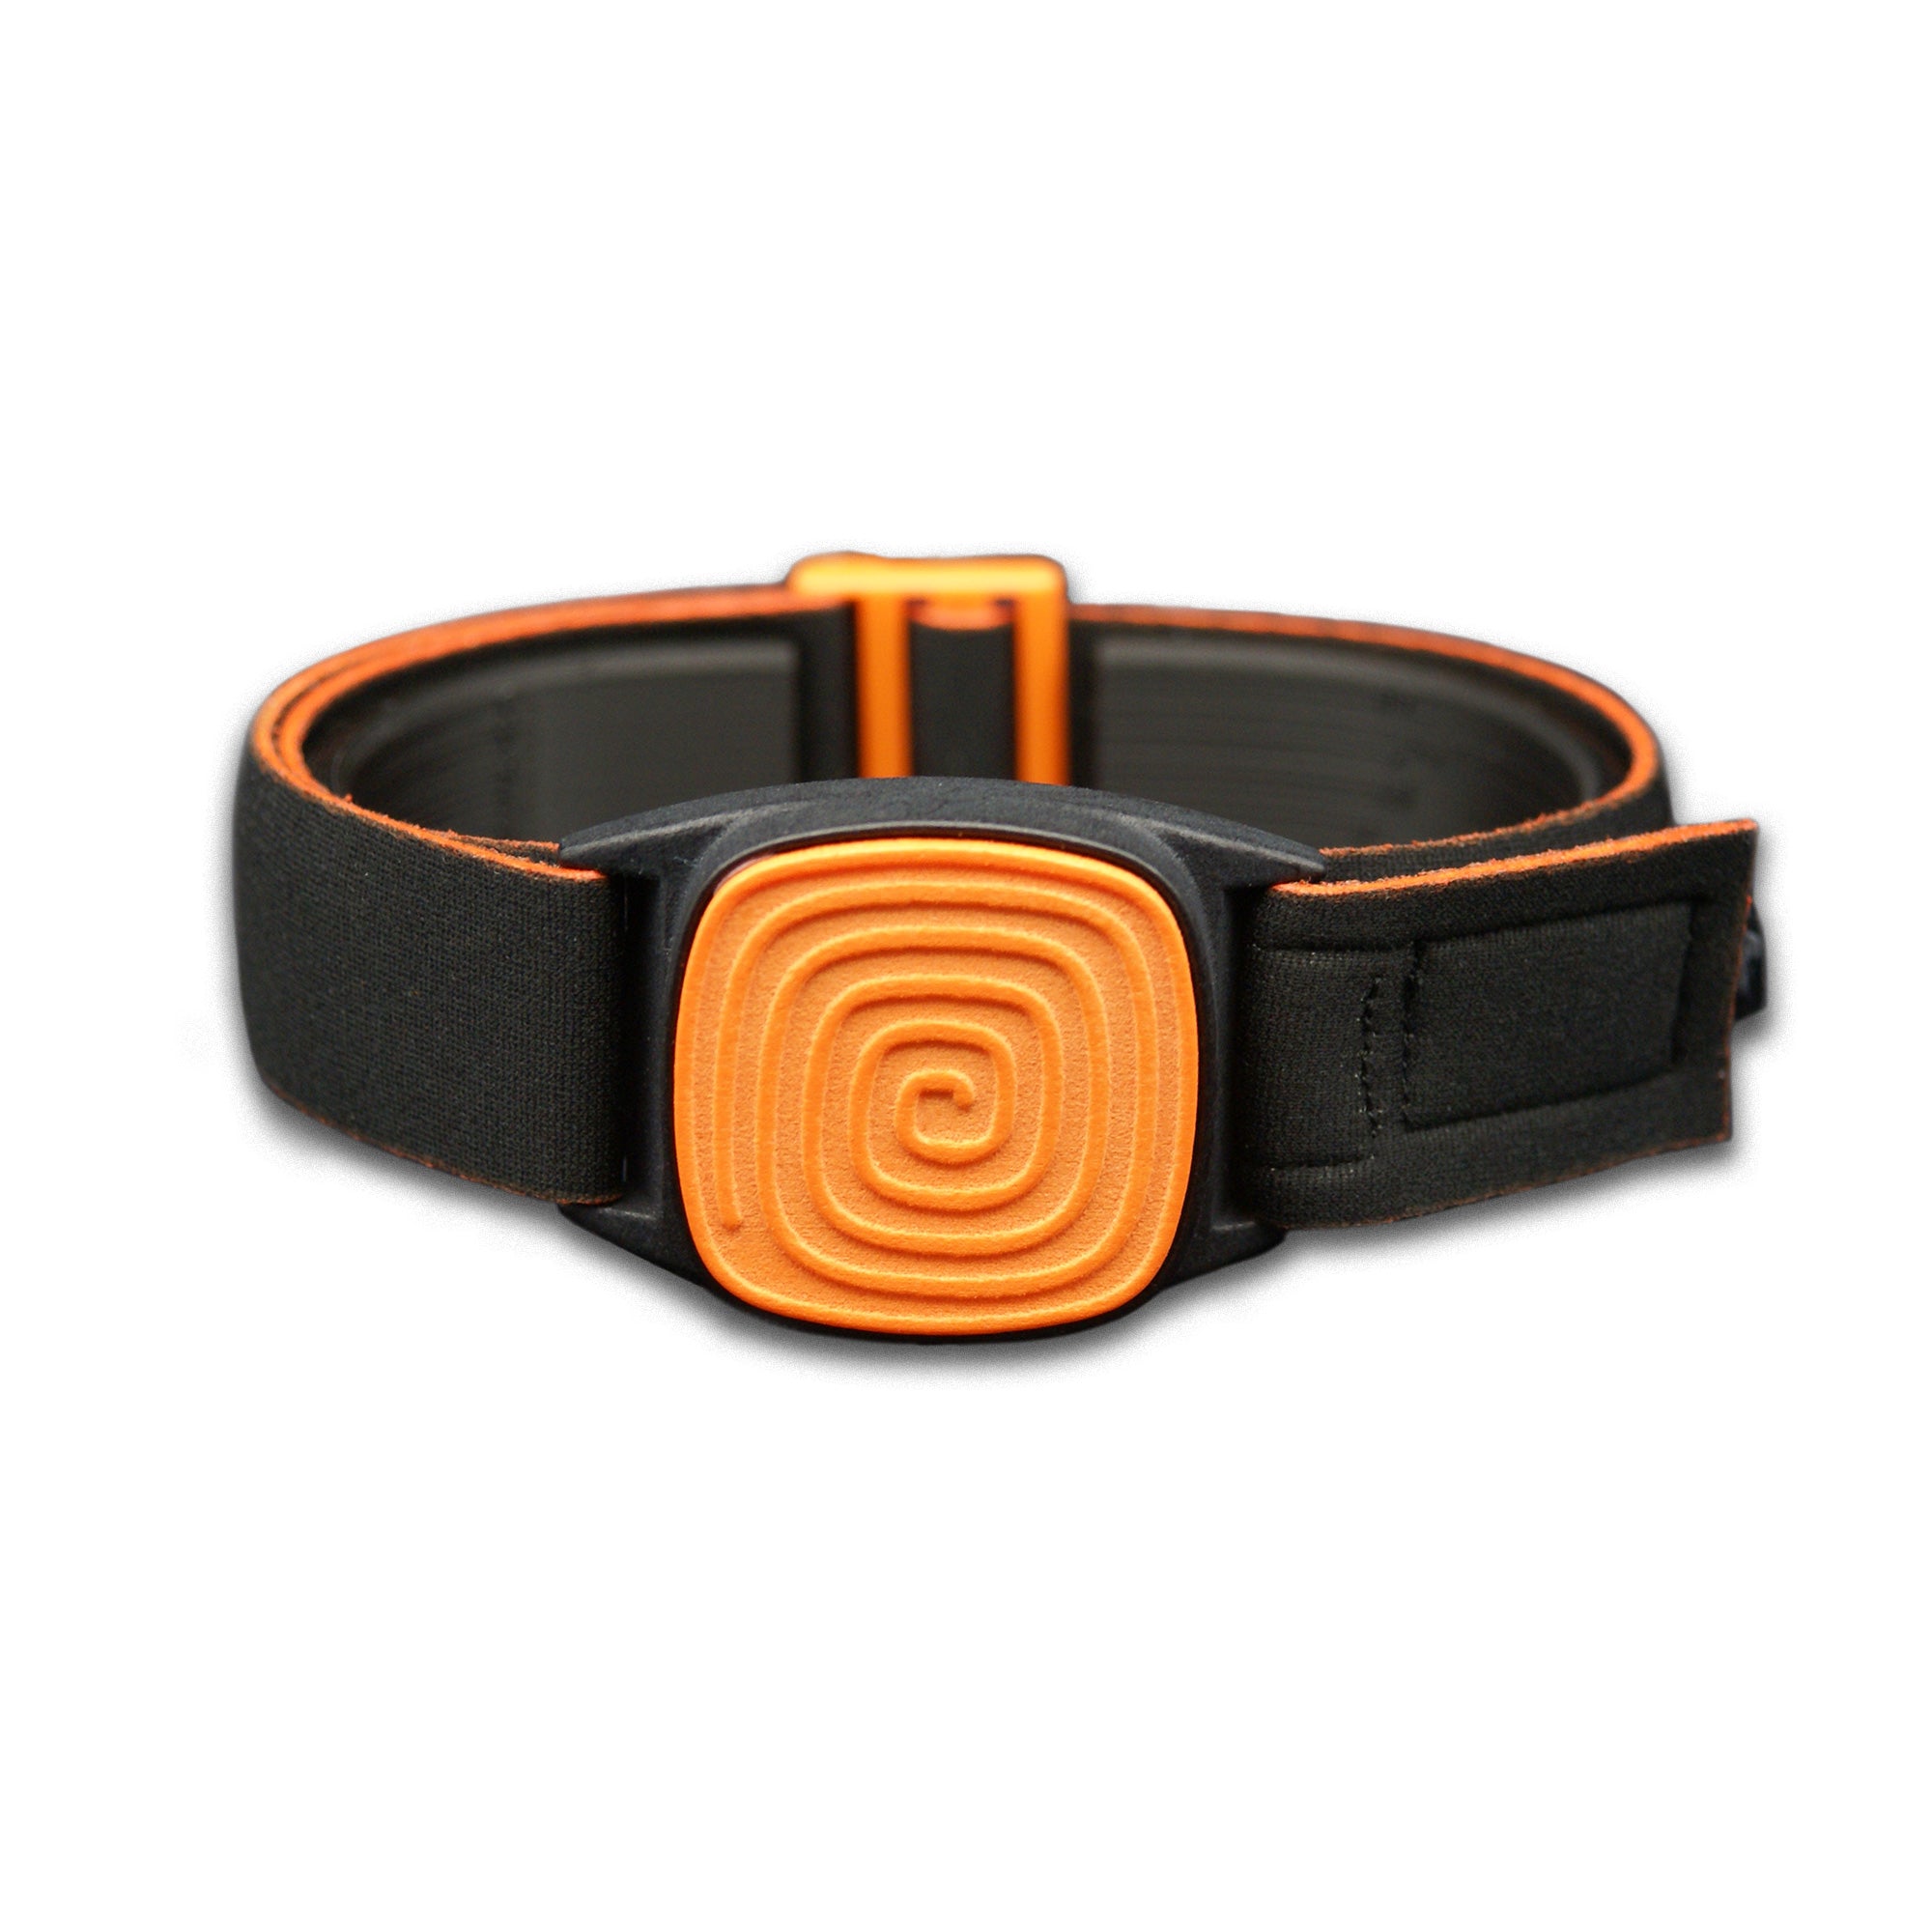 Libreband+ armband for Blucon. Orange cover with Swirl design. 